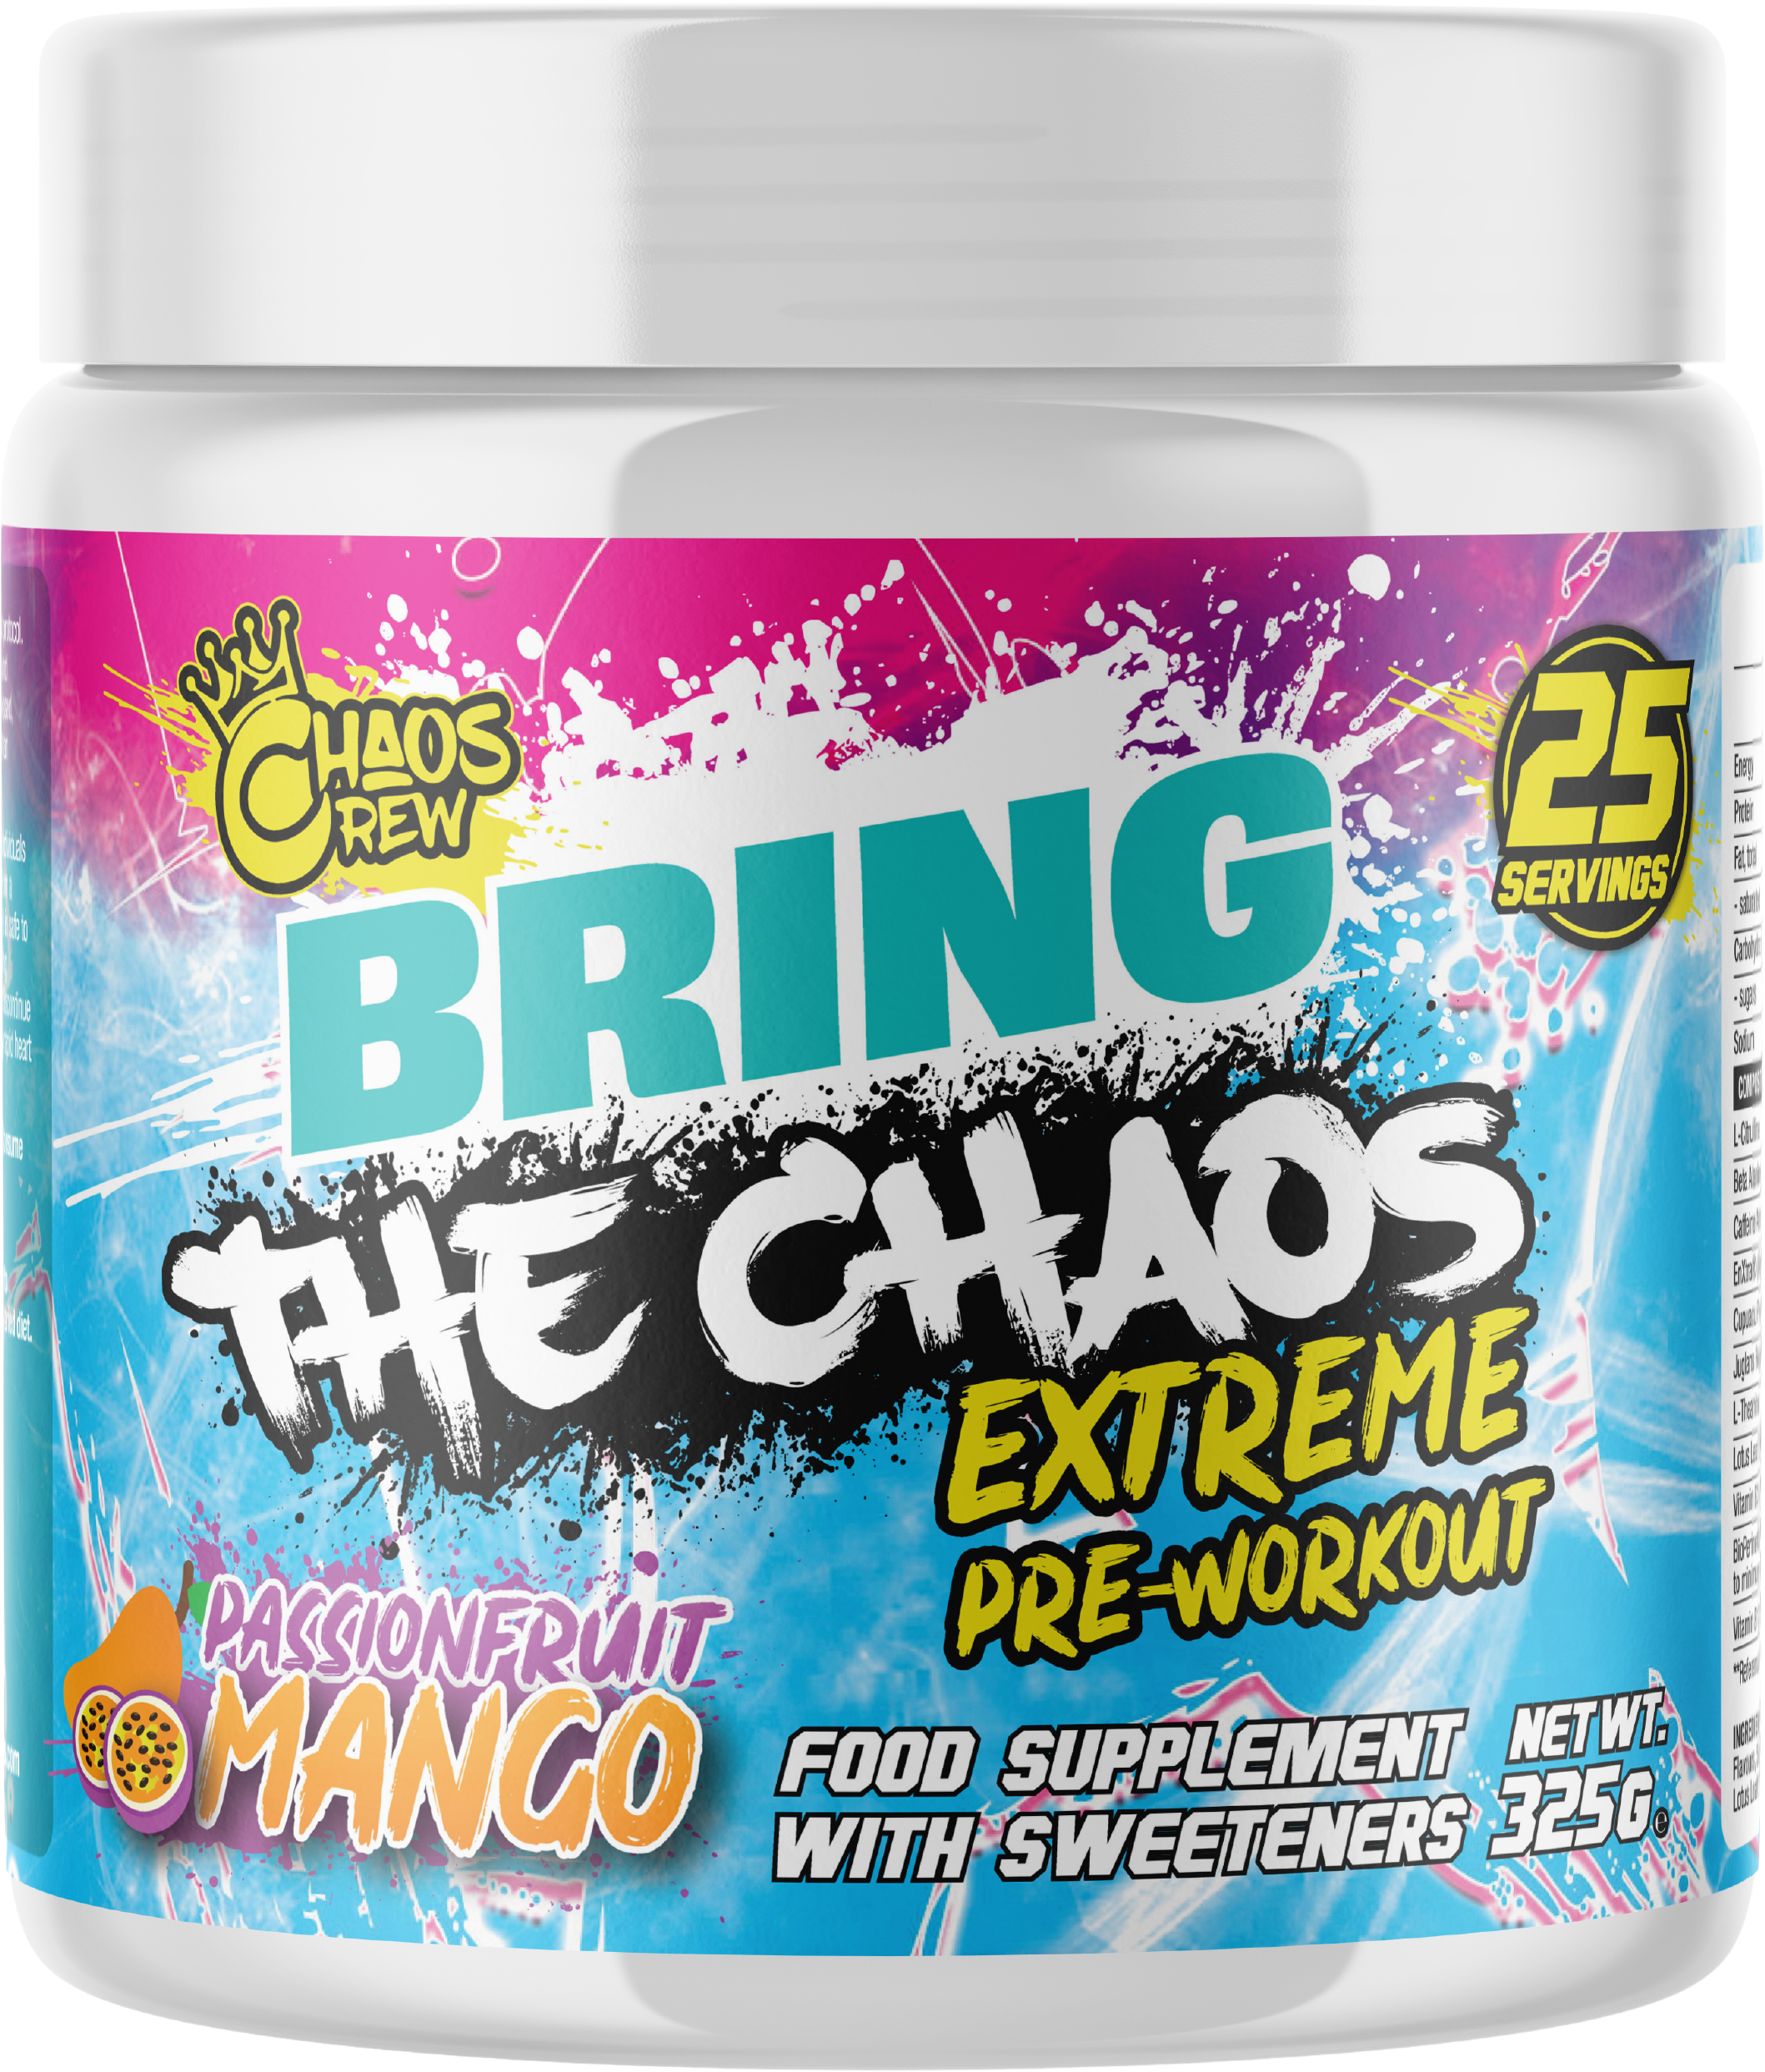 Bring the Chaos V2 | Extreme Pre-Workout - Strawberry Orange Sherbet